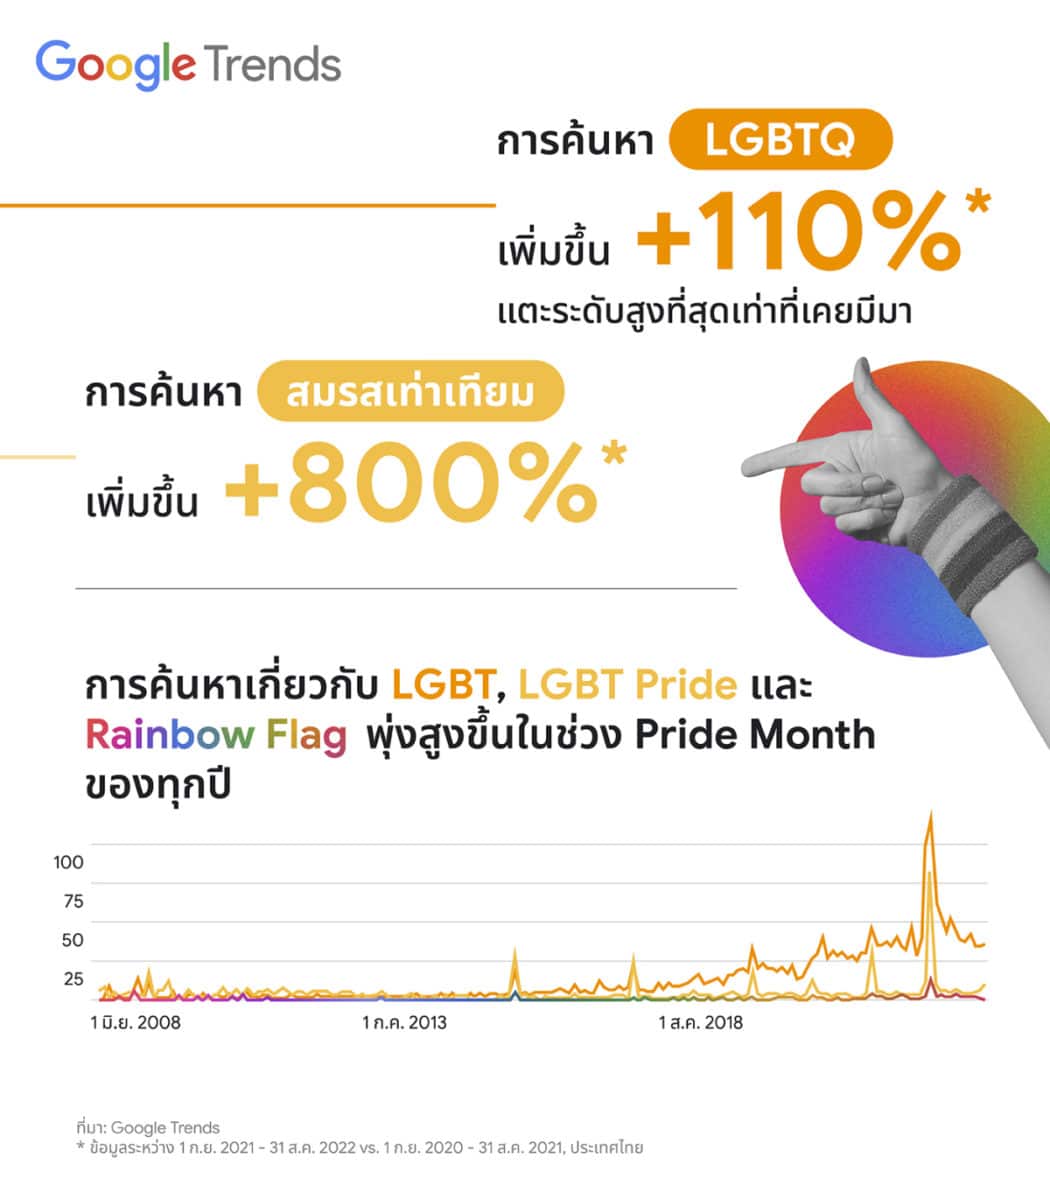 Google Pride Month LGBTQ+